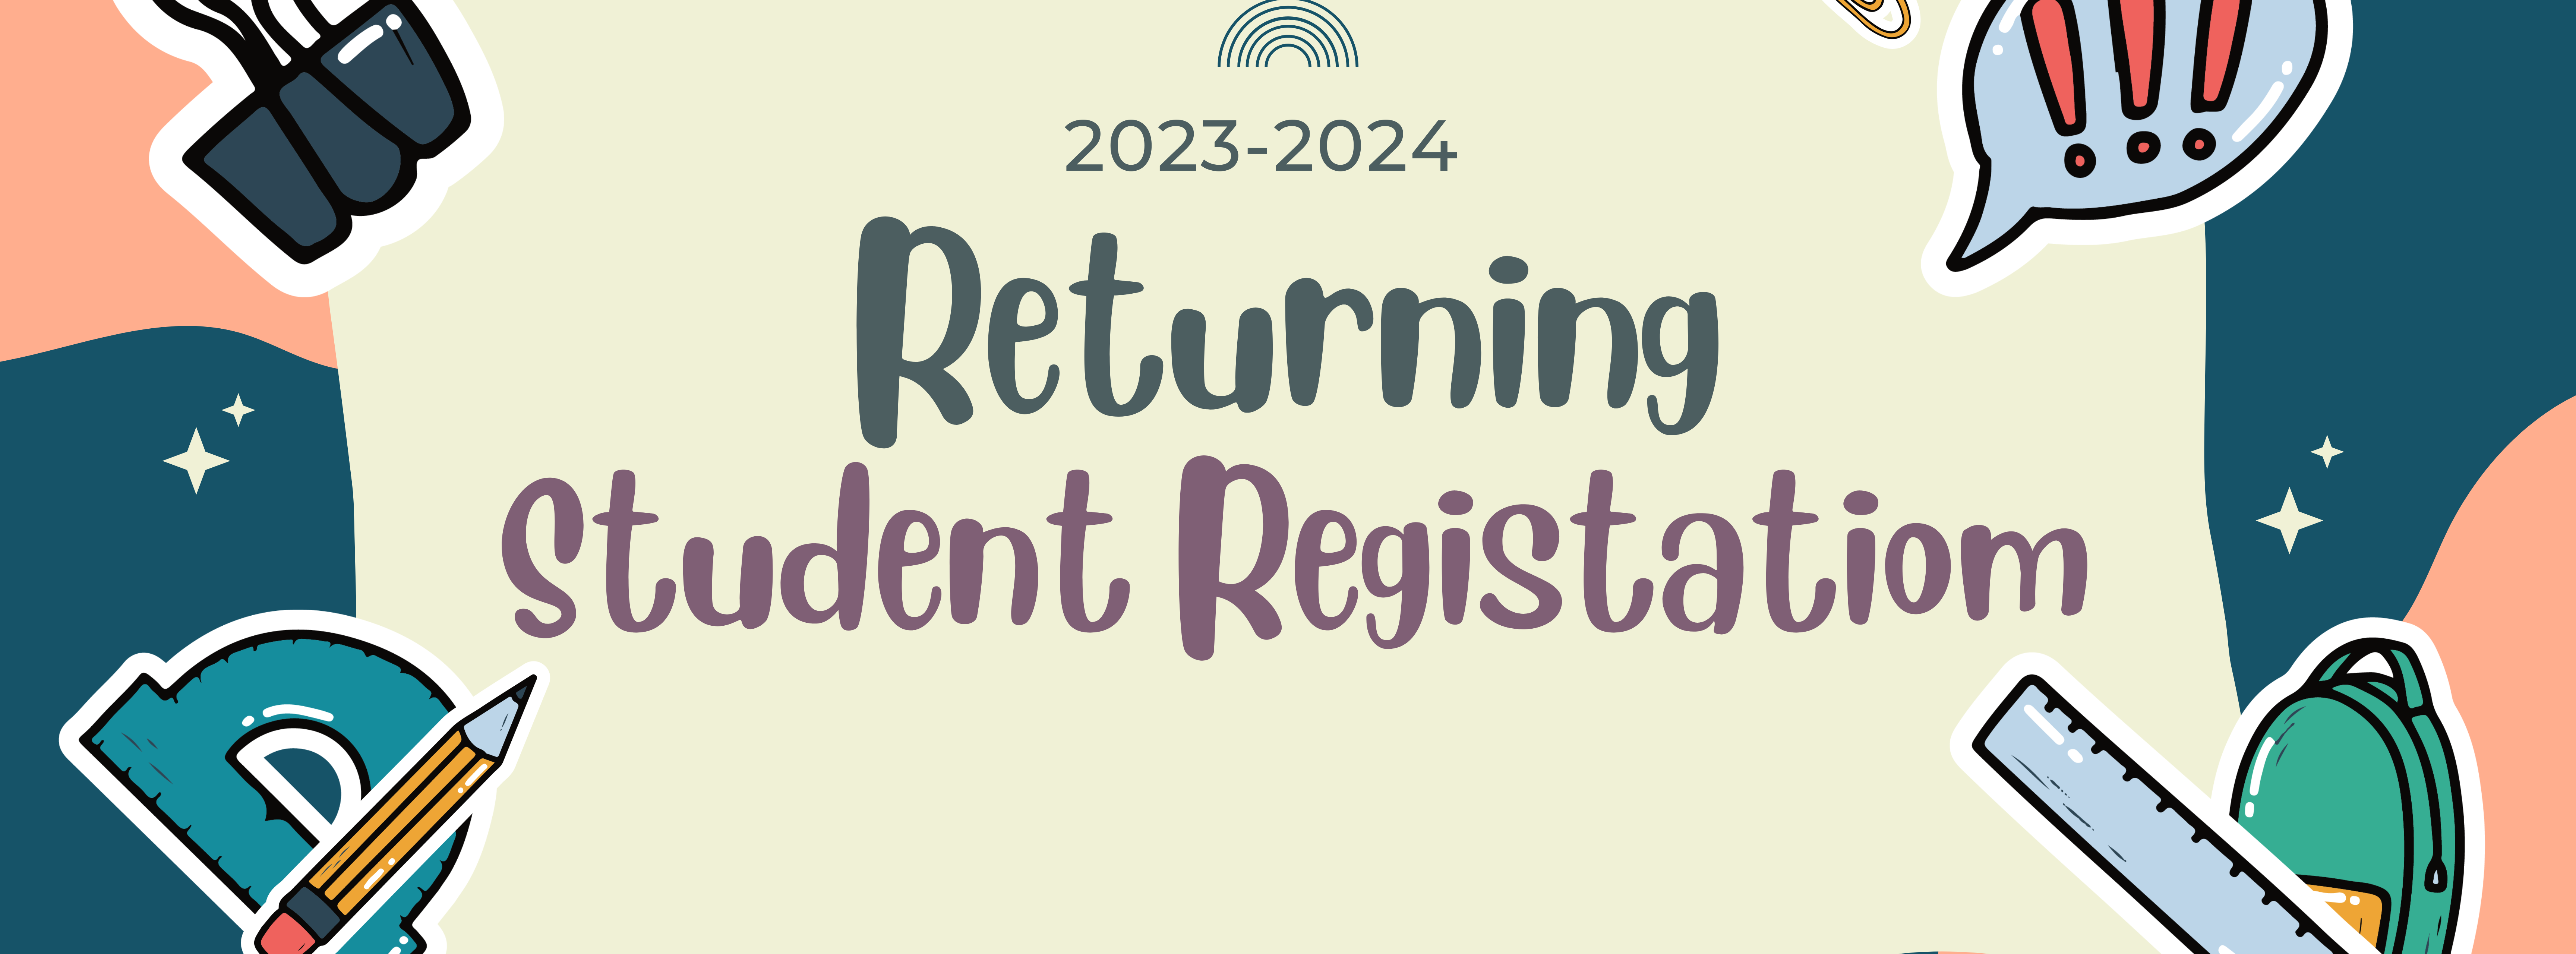 Returning Student Registration Open 23-24